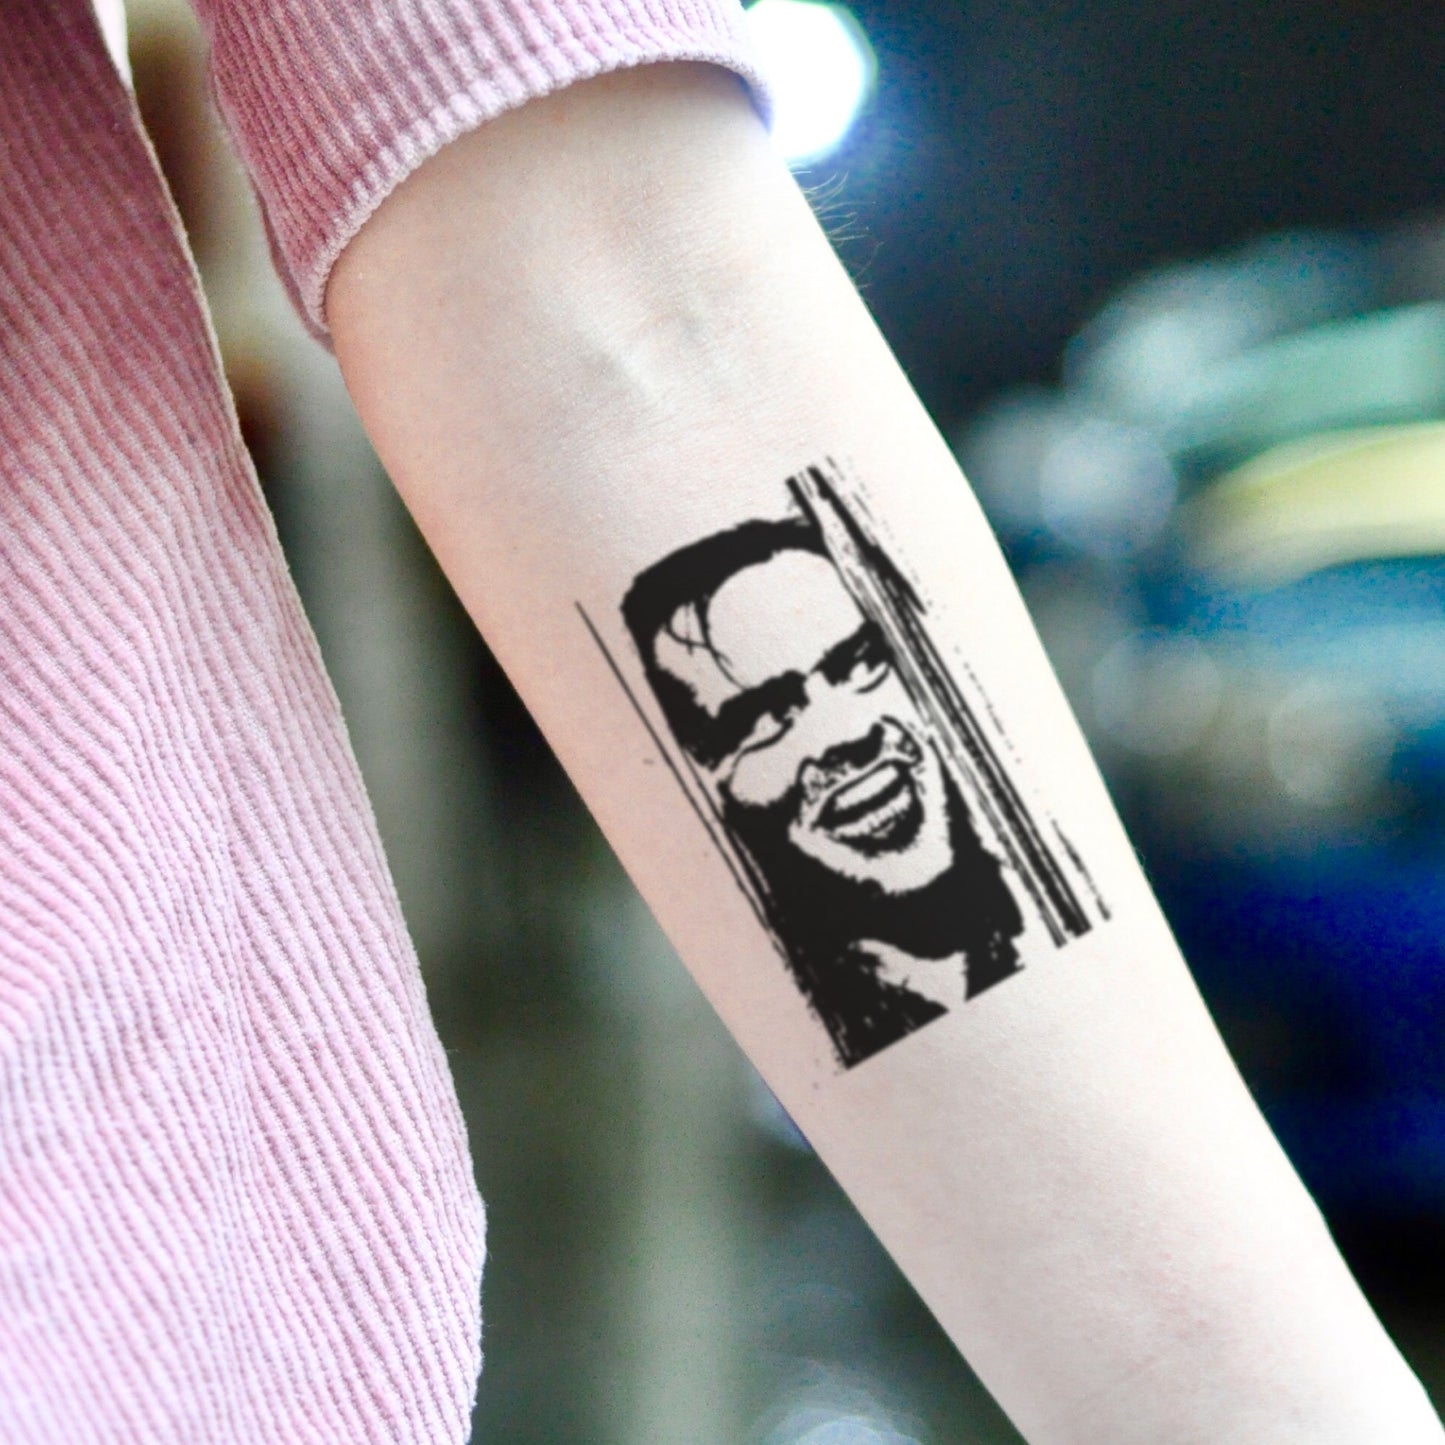 fake small the shining portrait temporary tattoo sticker design idea on inner arm